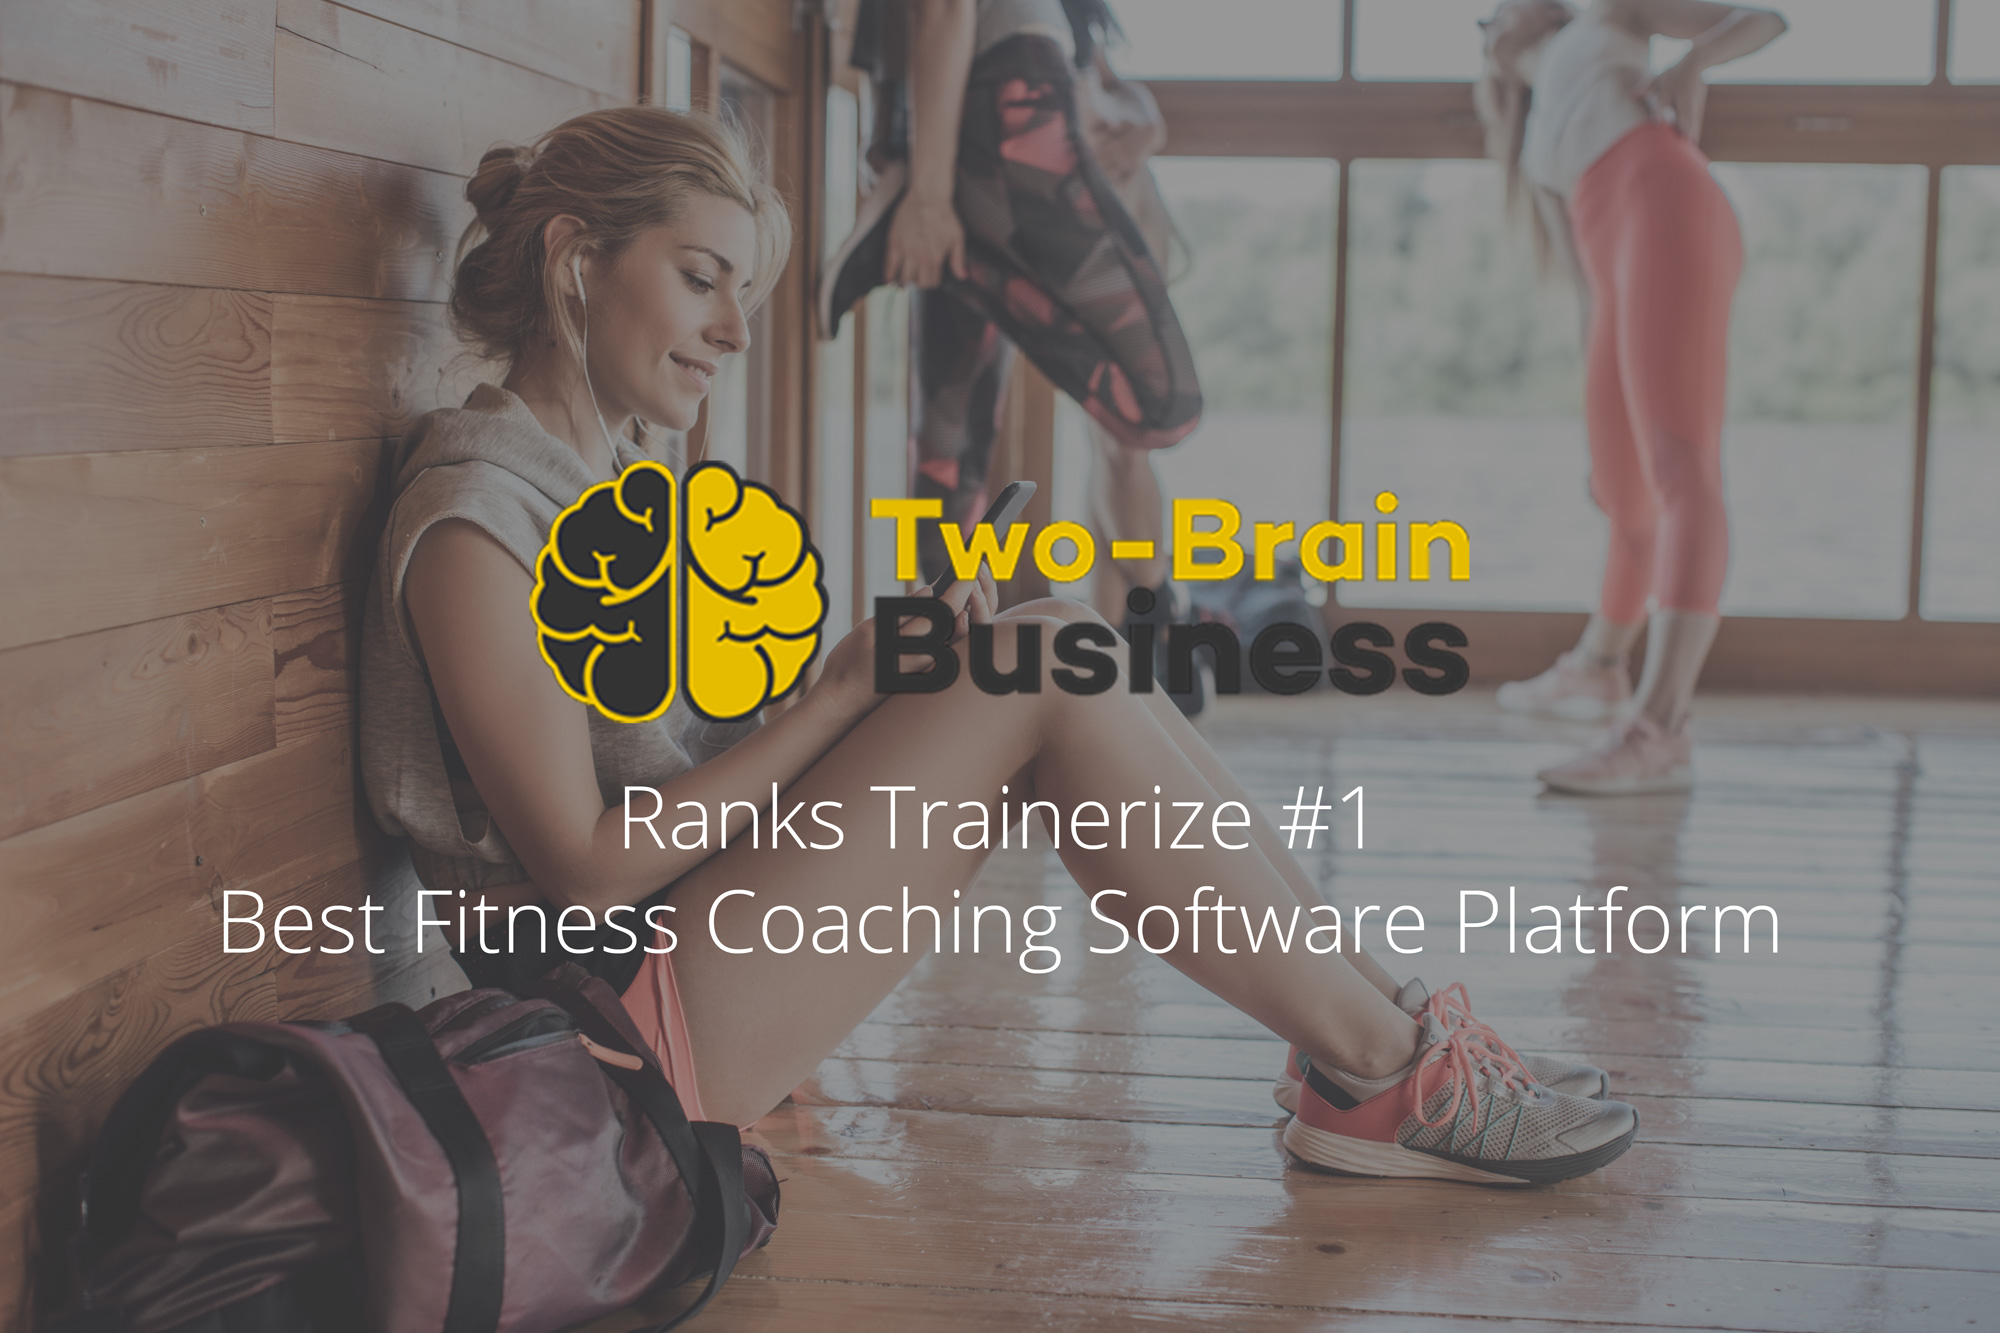 TwoBrain Business Ranks Trainerize Best Fitness Coaching Software Platform